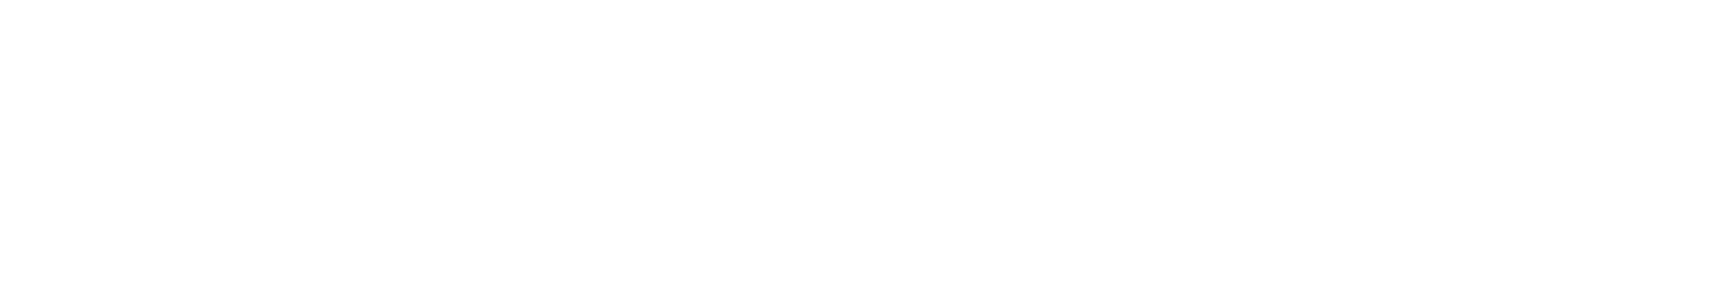 NAMIC Leadership Development